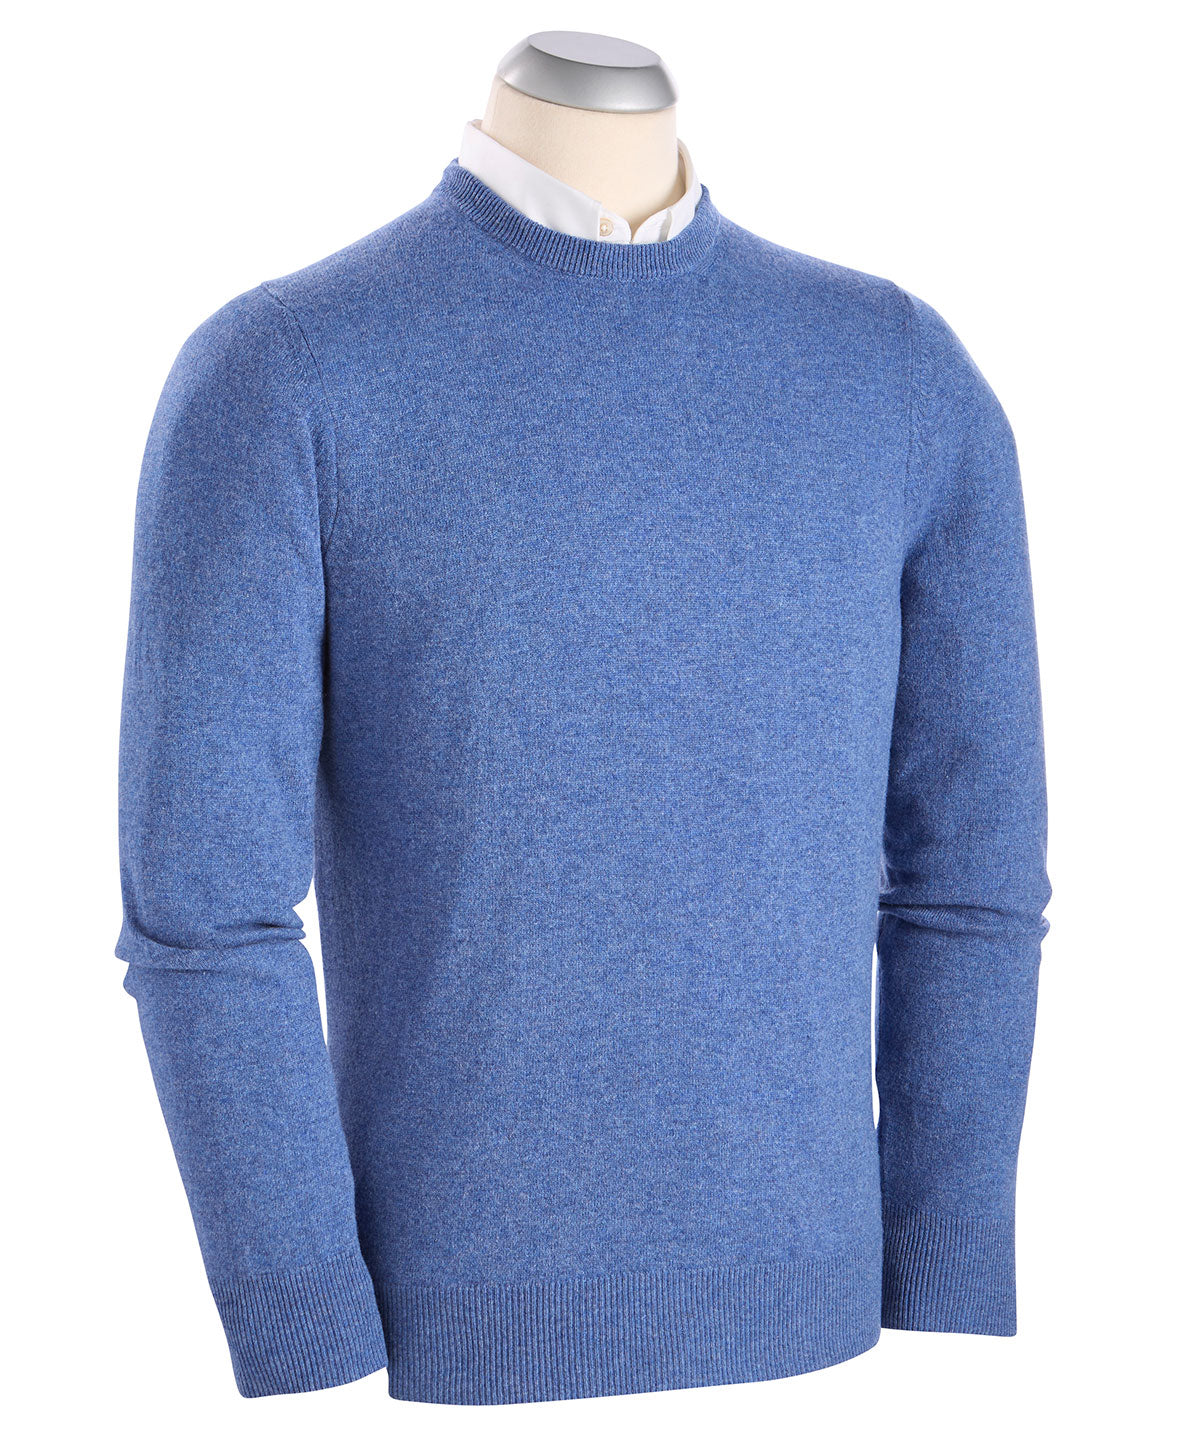 Italian Cashmere Sweaters - Bobby Jones